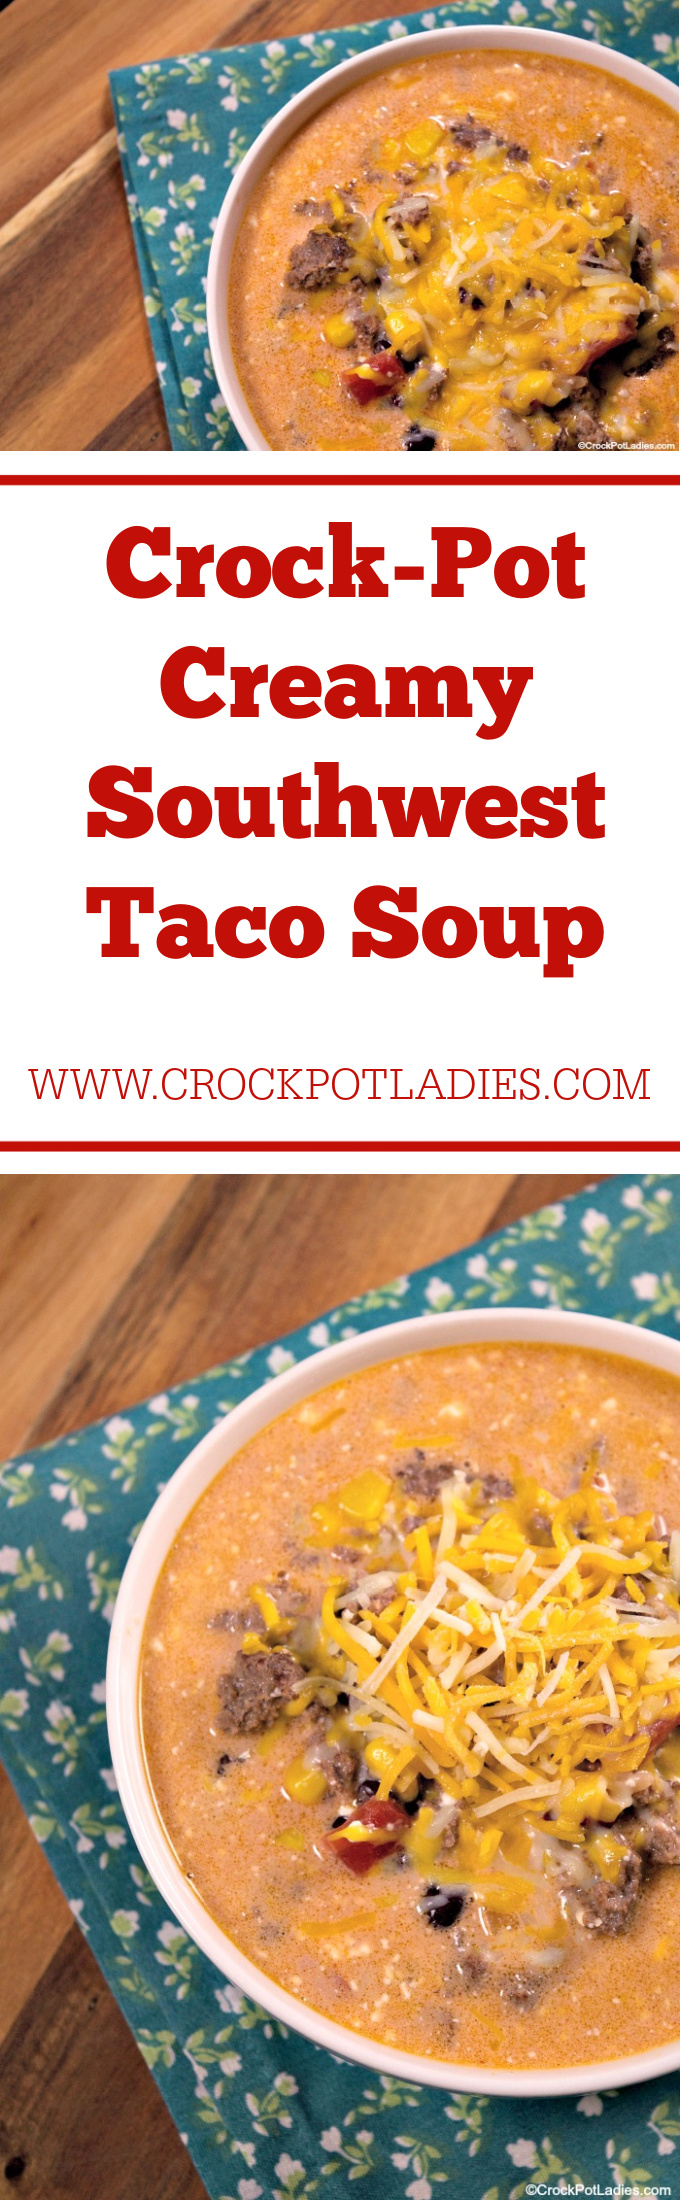 Crock-Pot Creamy Southwest Taco Soup